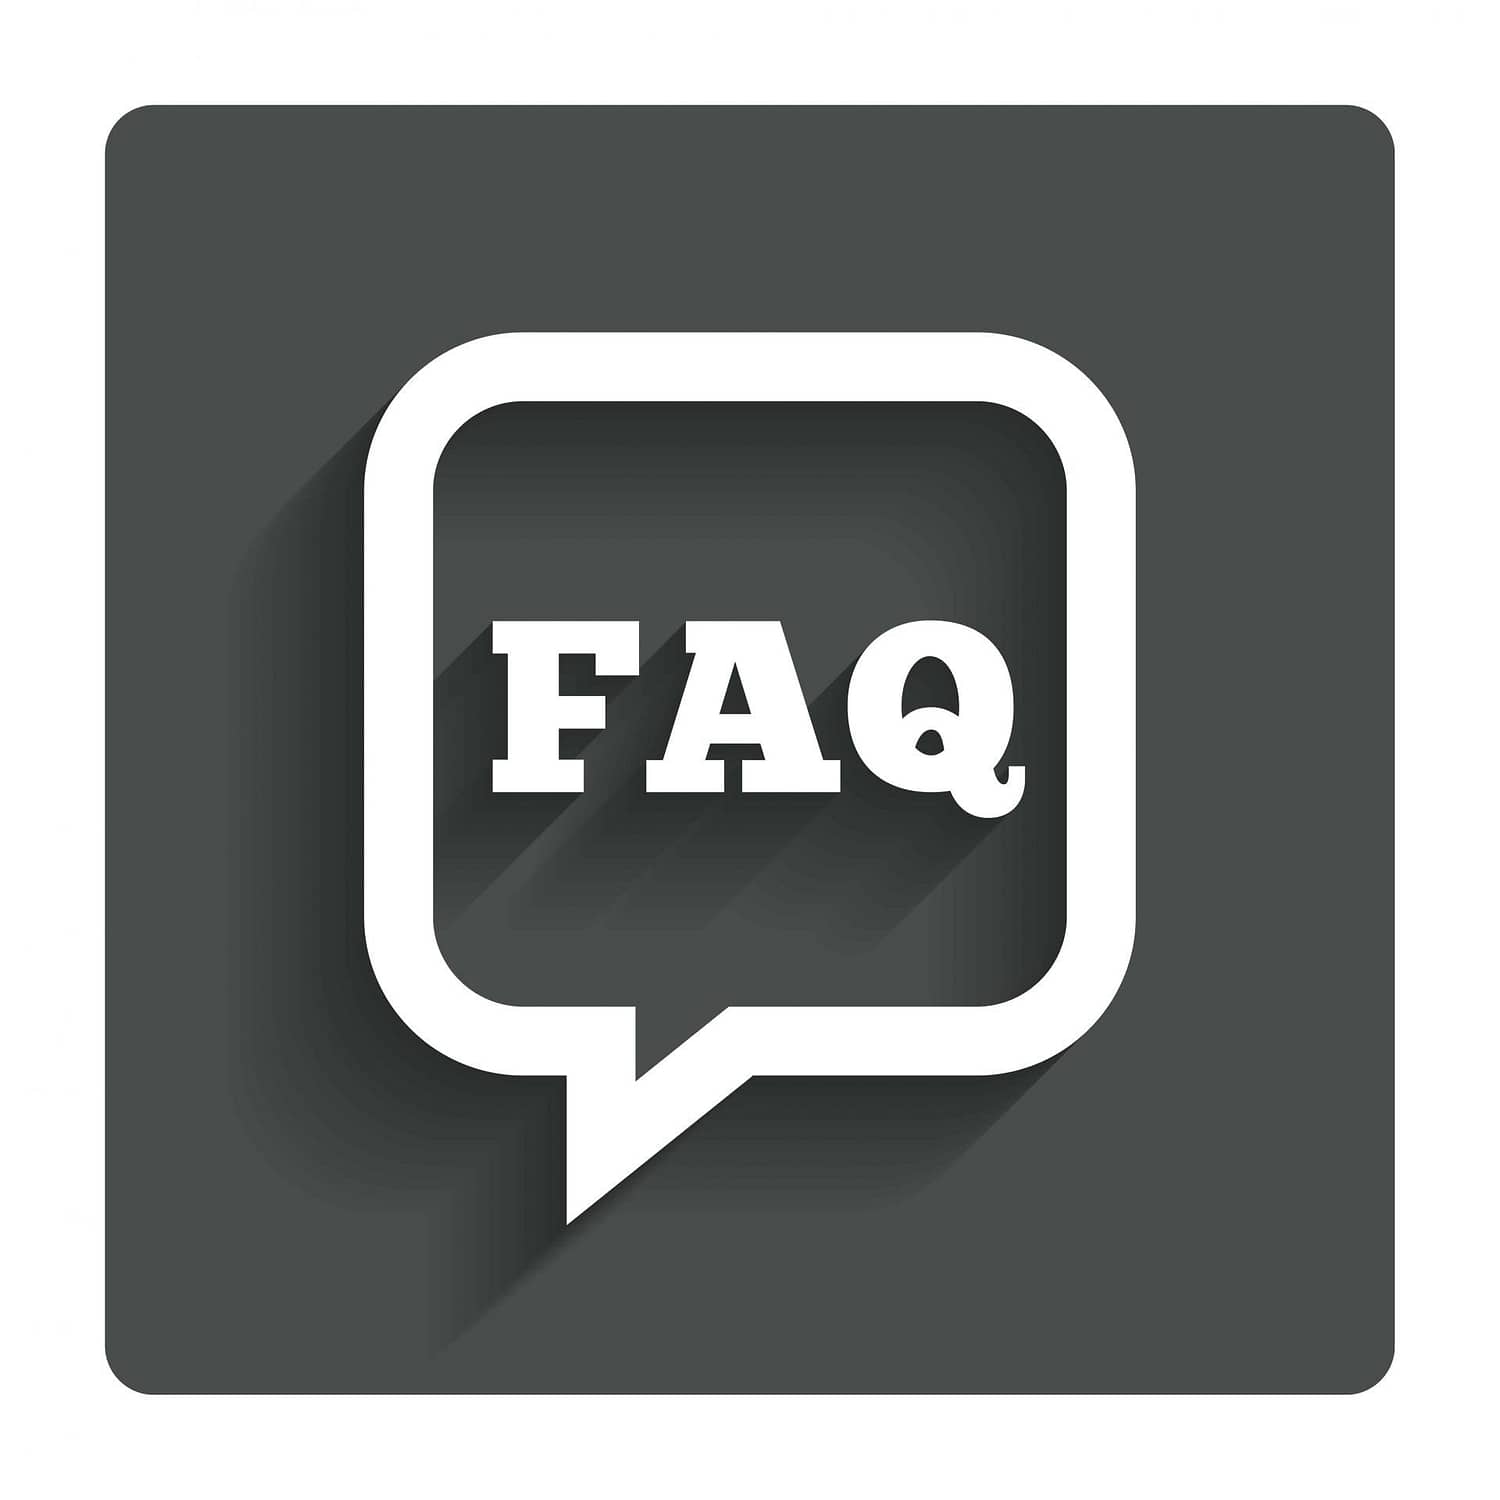 FAQ information sign icon.